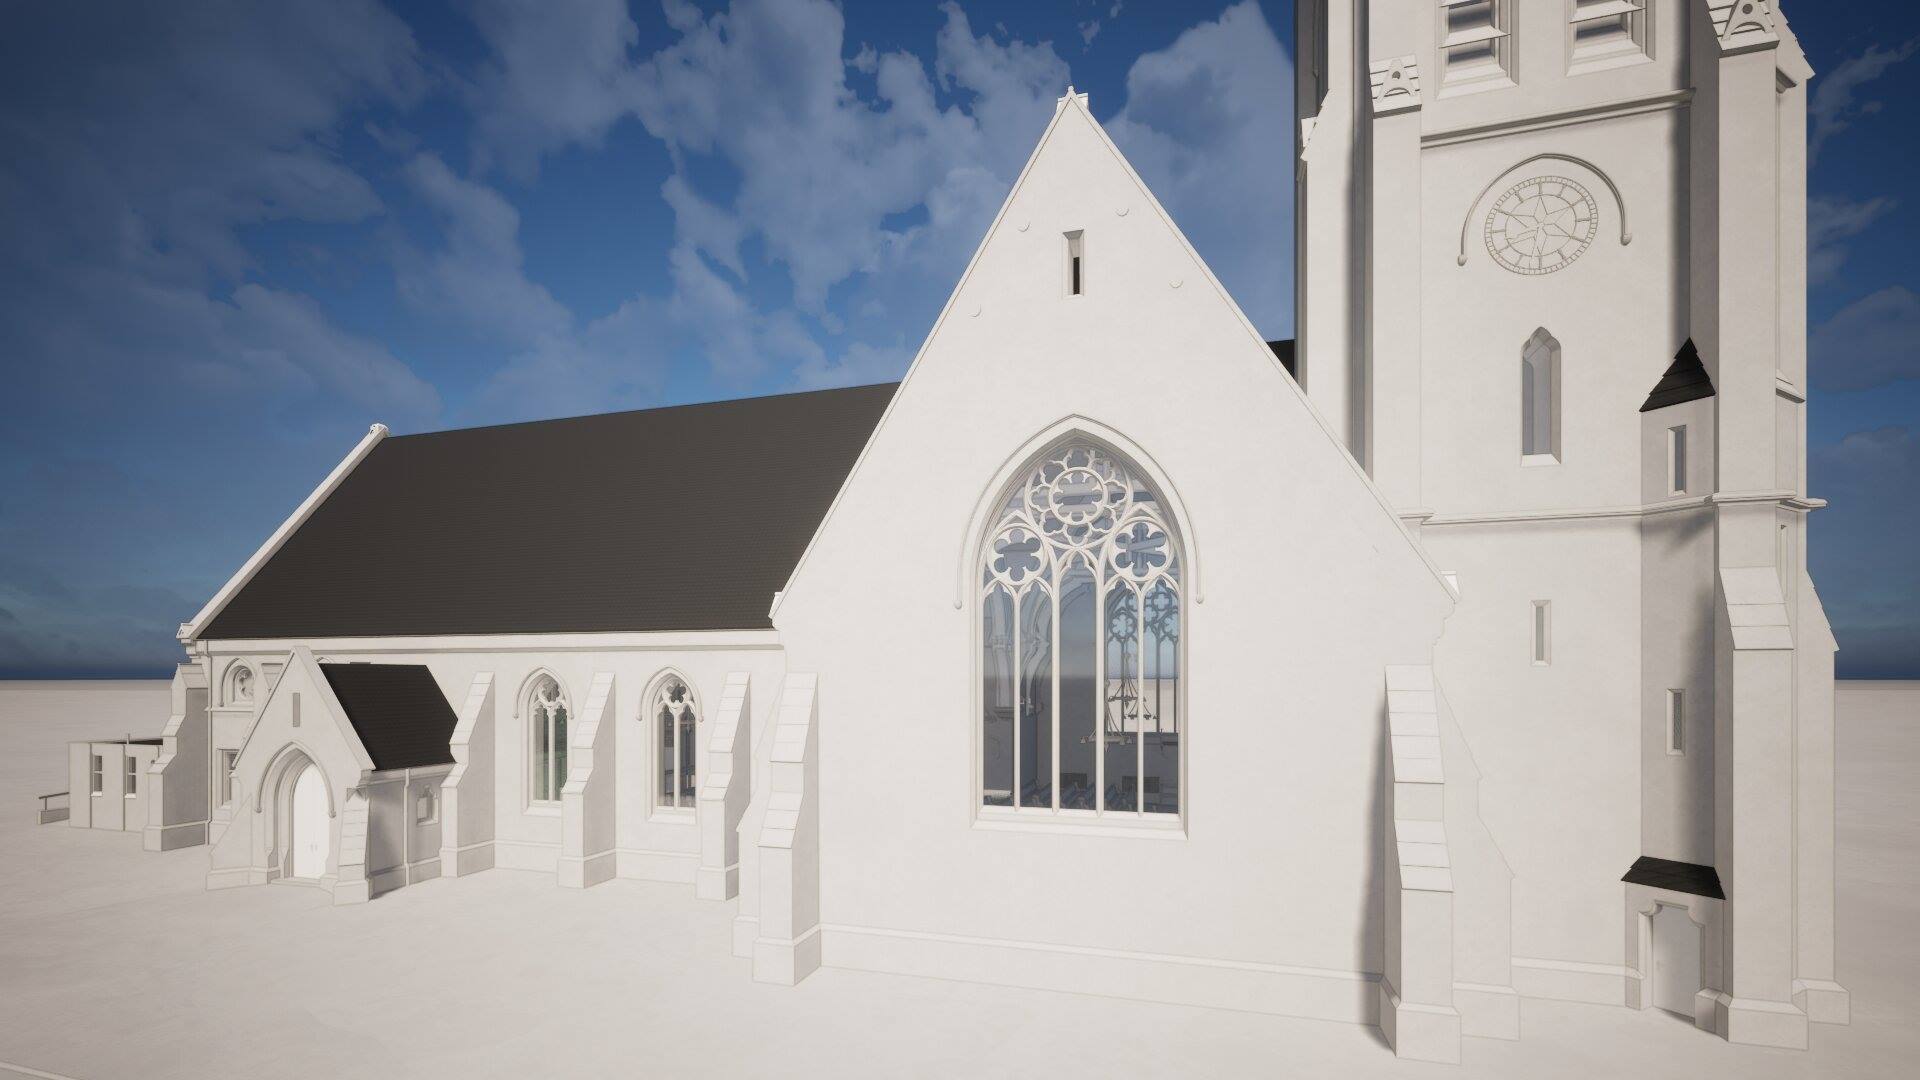 Revit Model of a Church